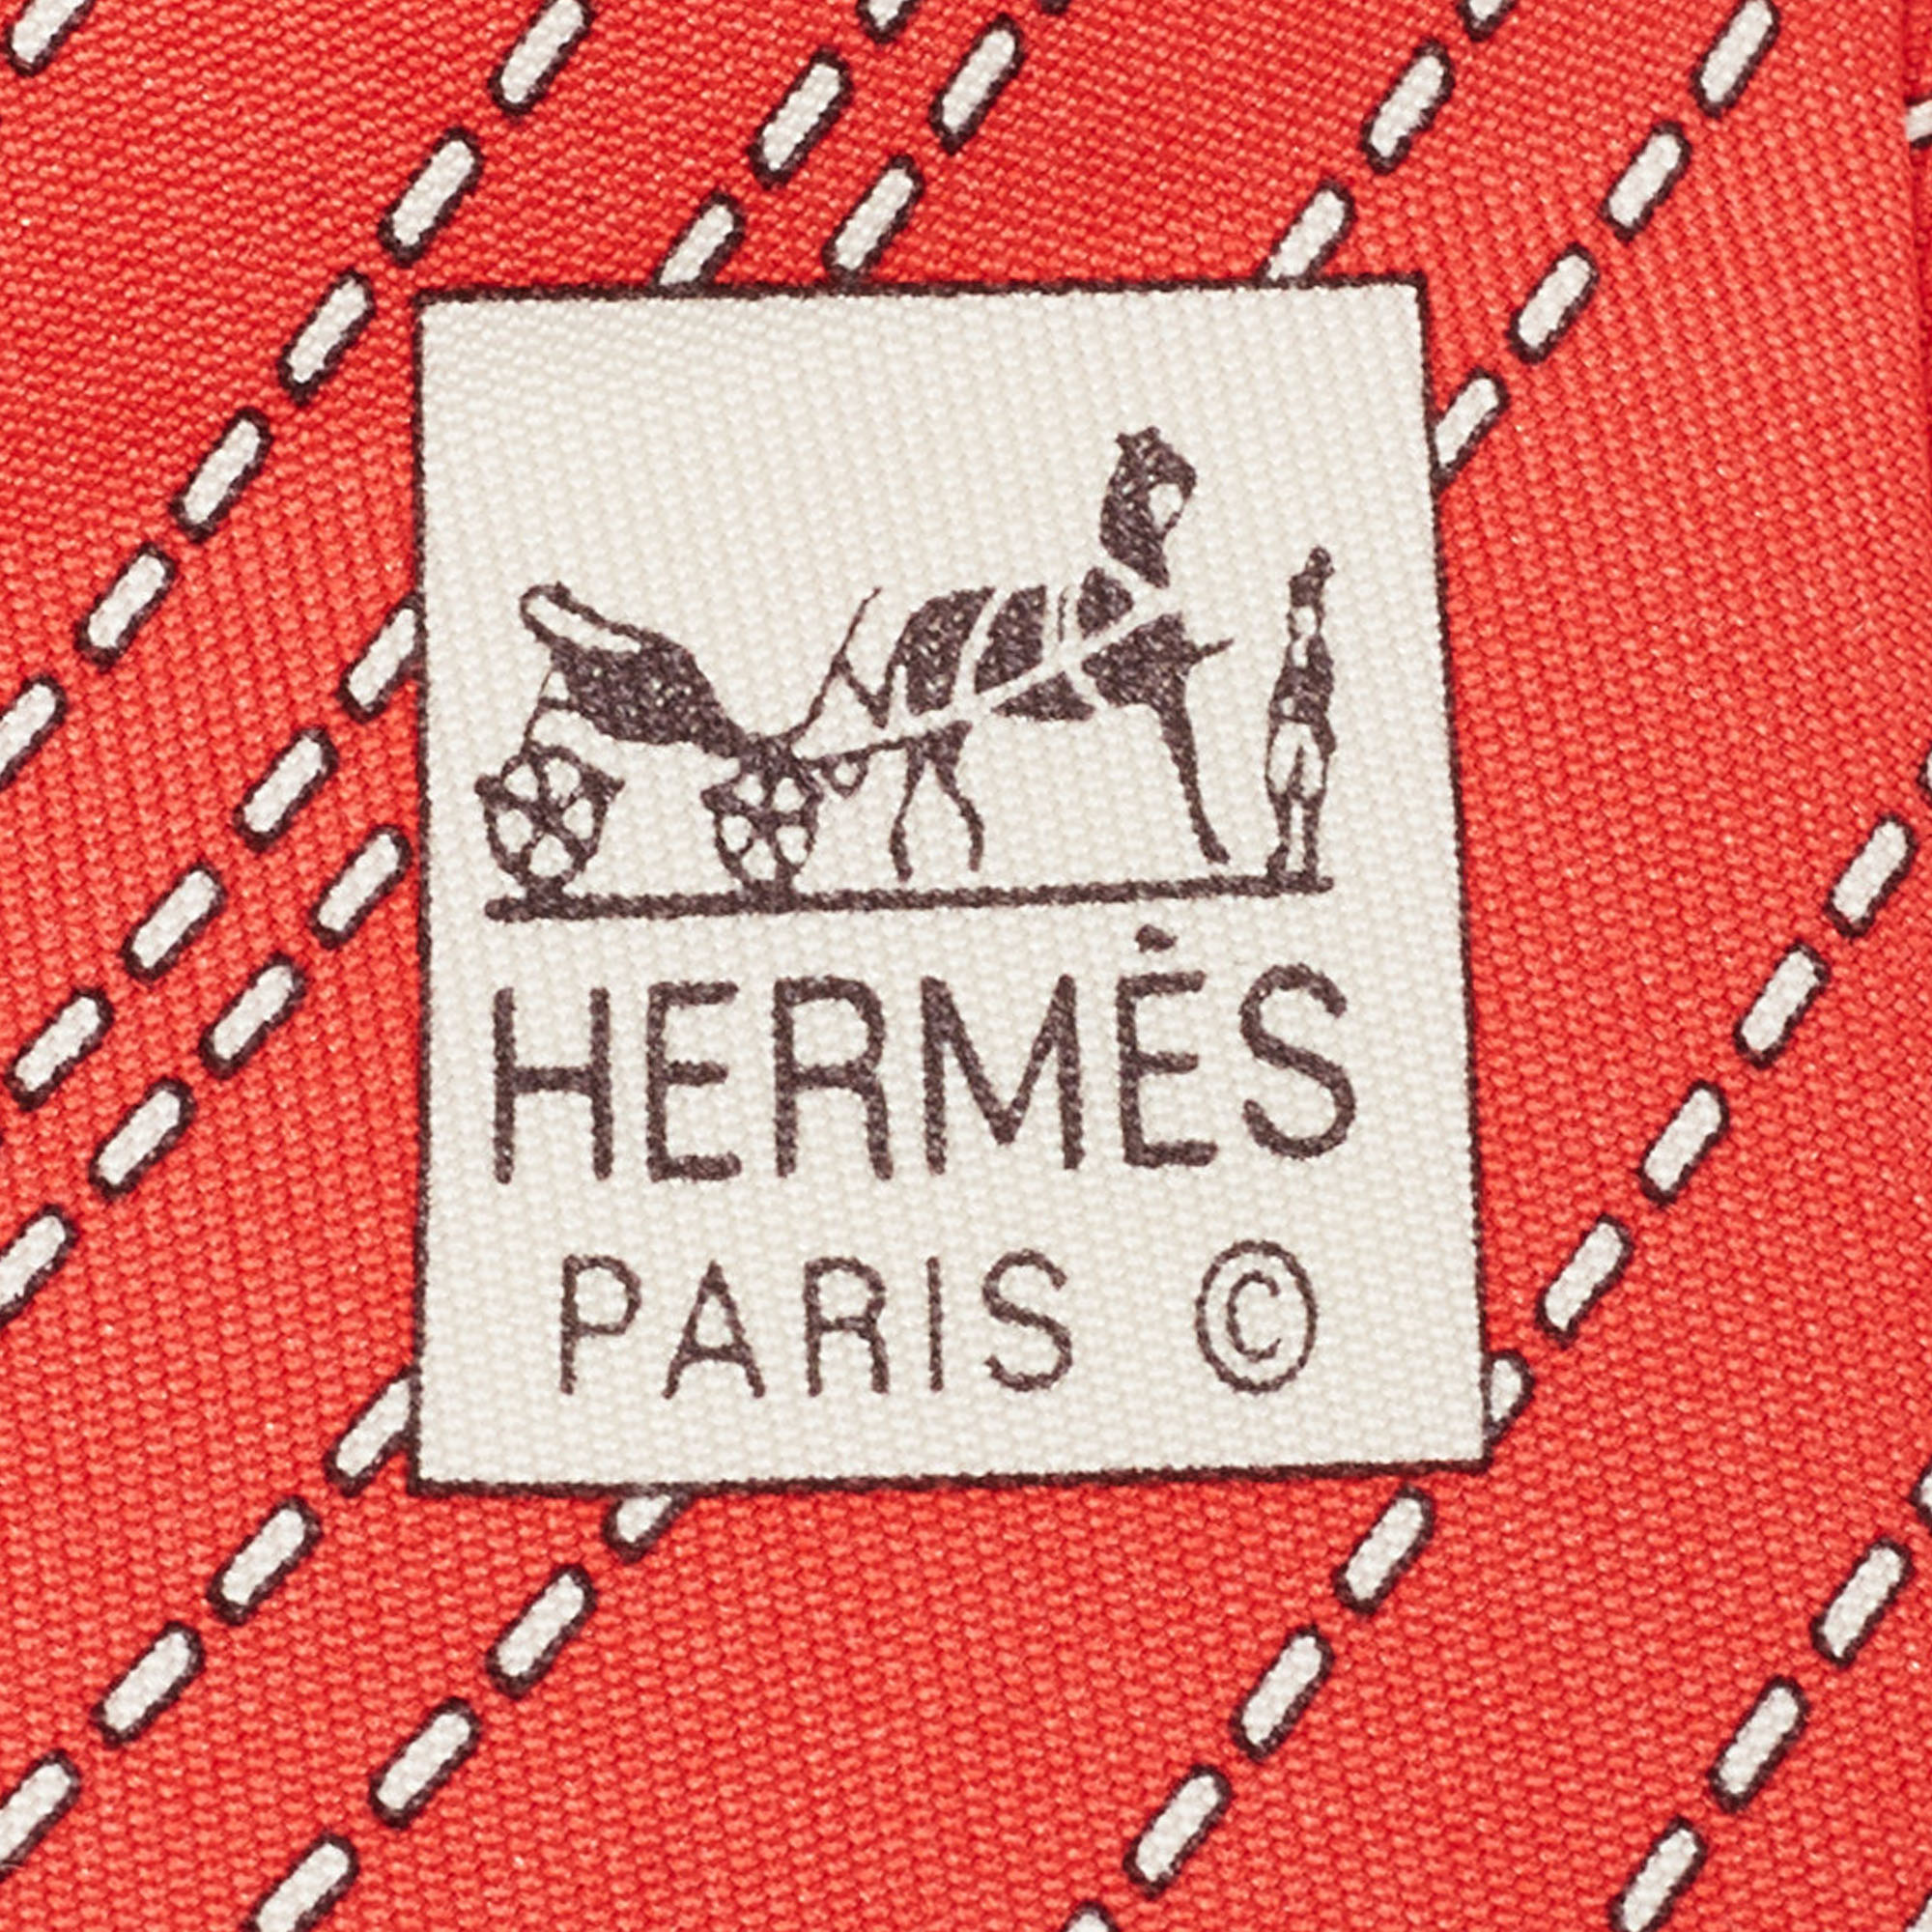 Hermes Orange Dotted Diagonal Linear Print Silk Tie